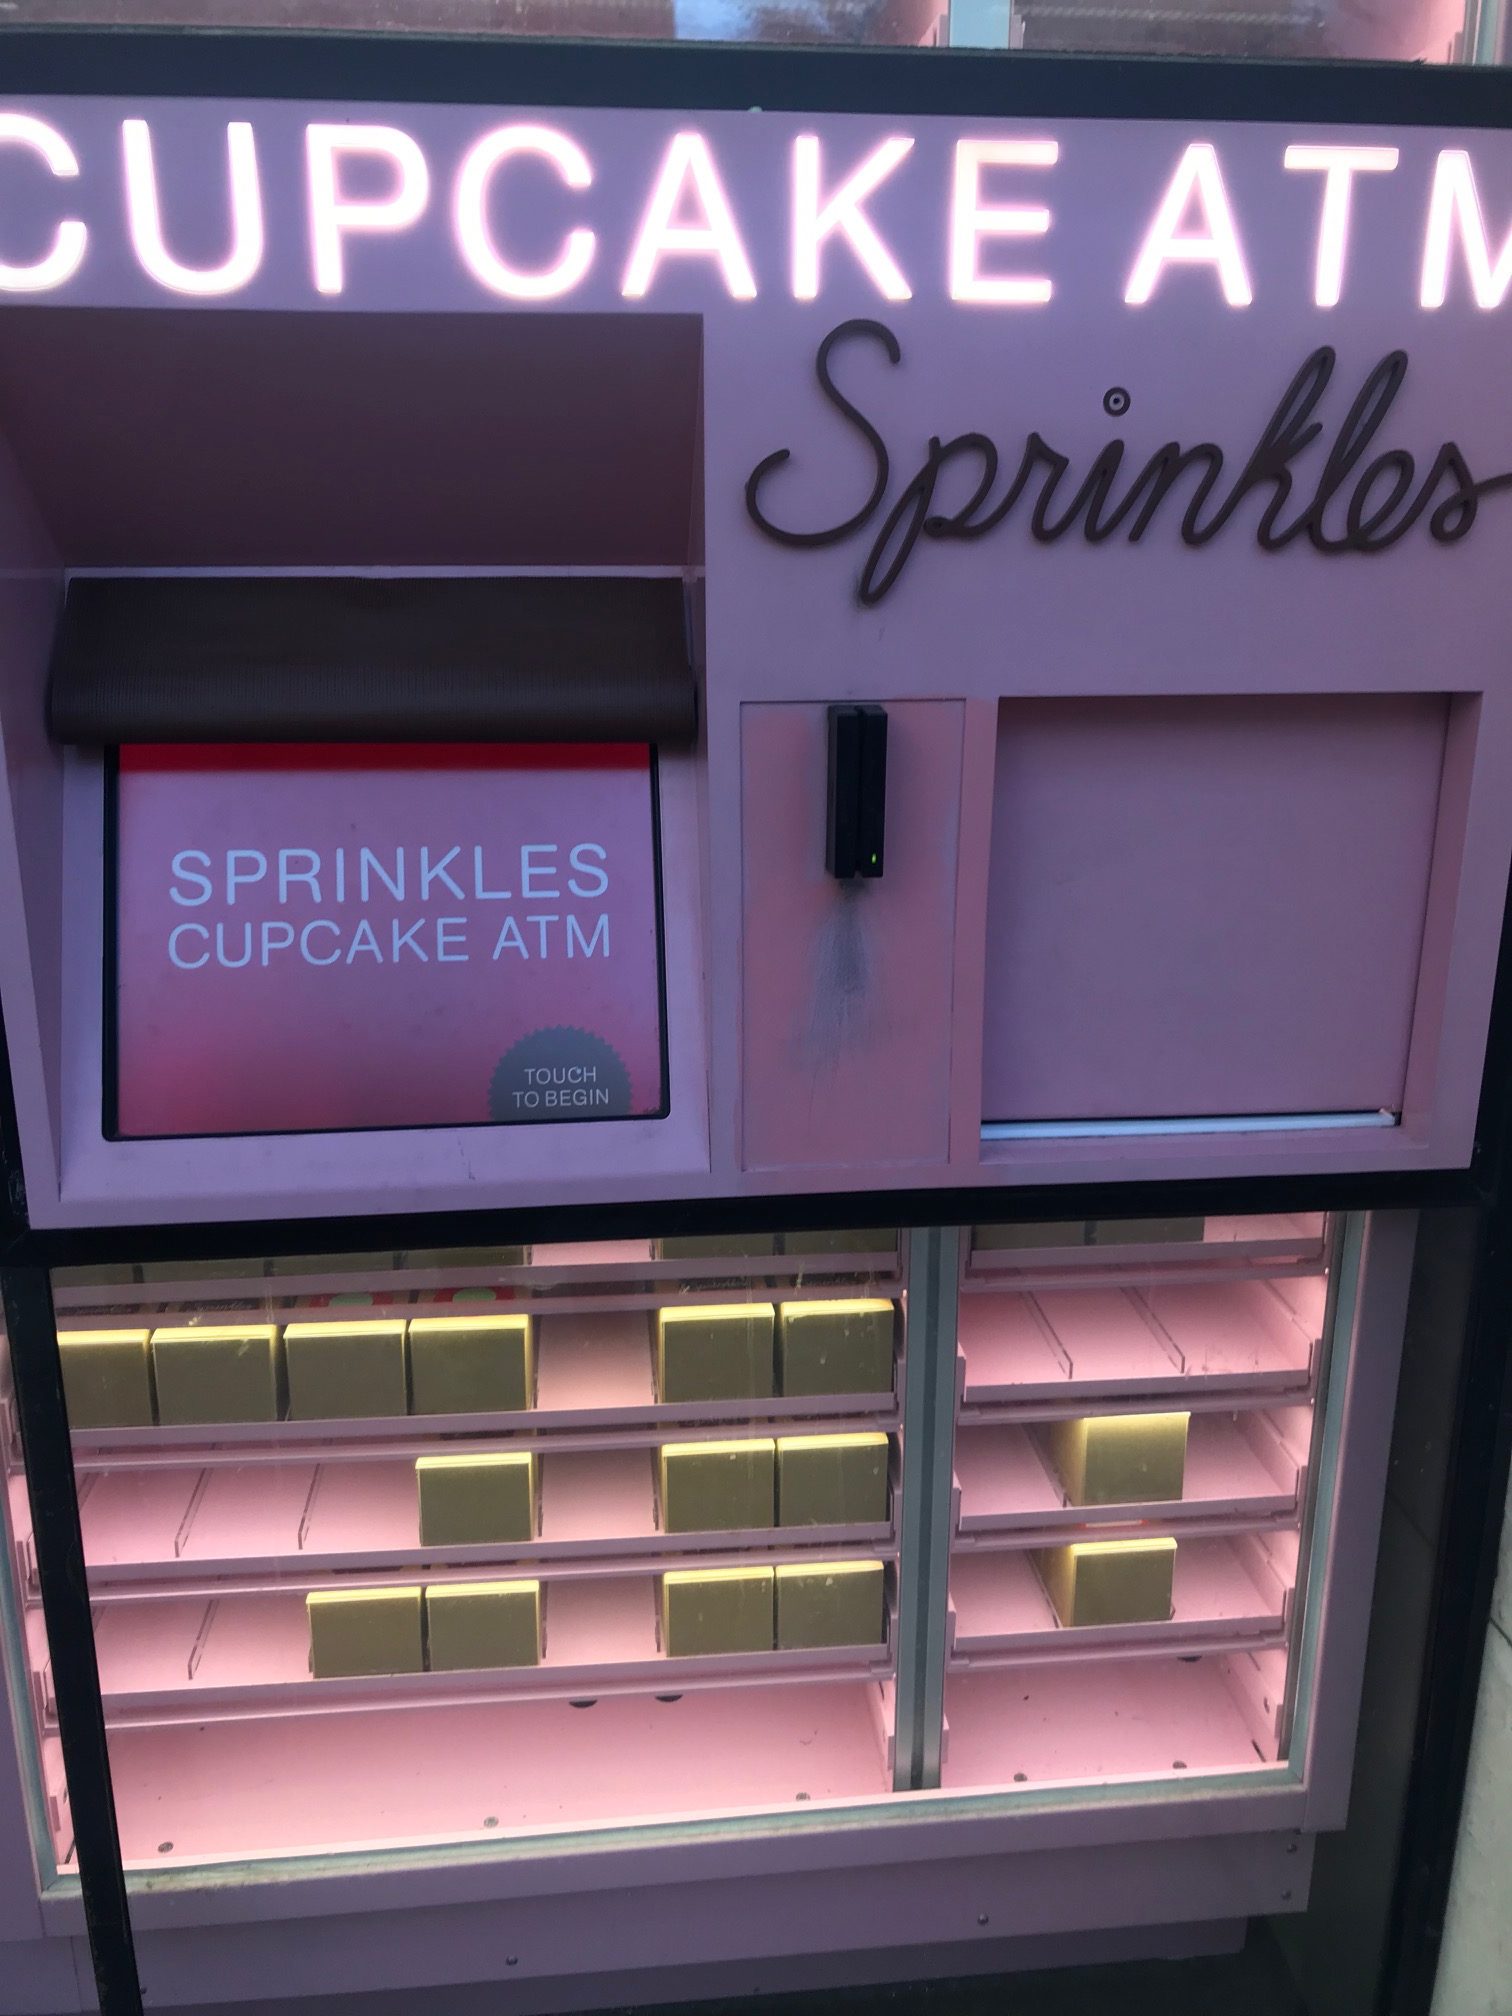 Amazing Treat: Cupcake ATM by Sprinkles, Scottsdale, AZ.